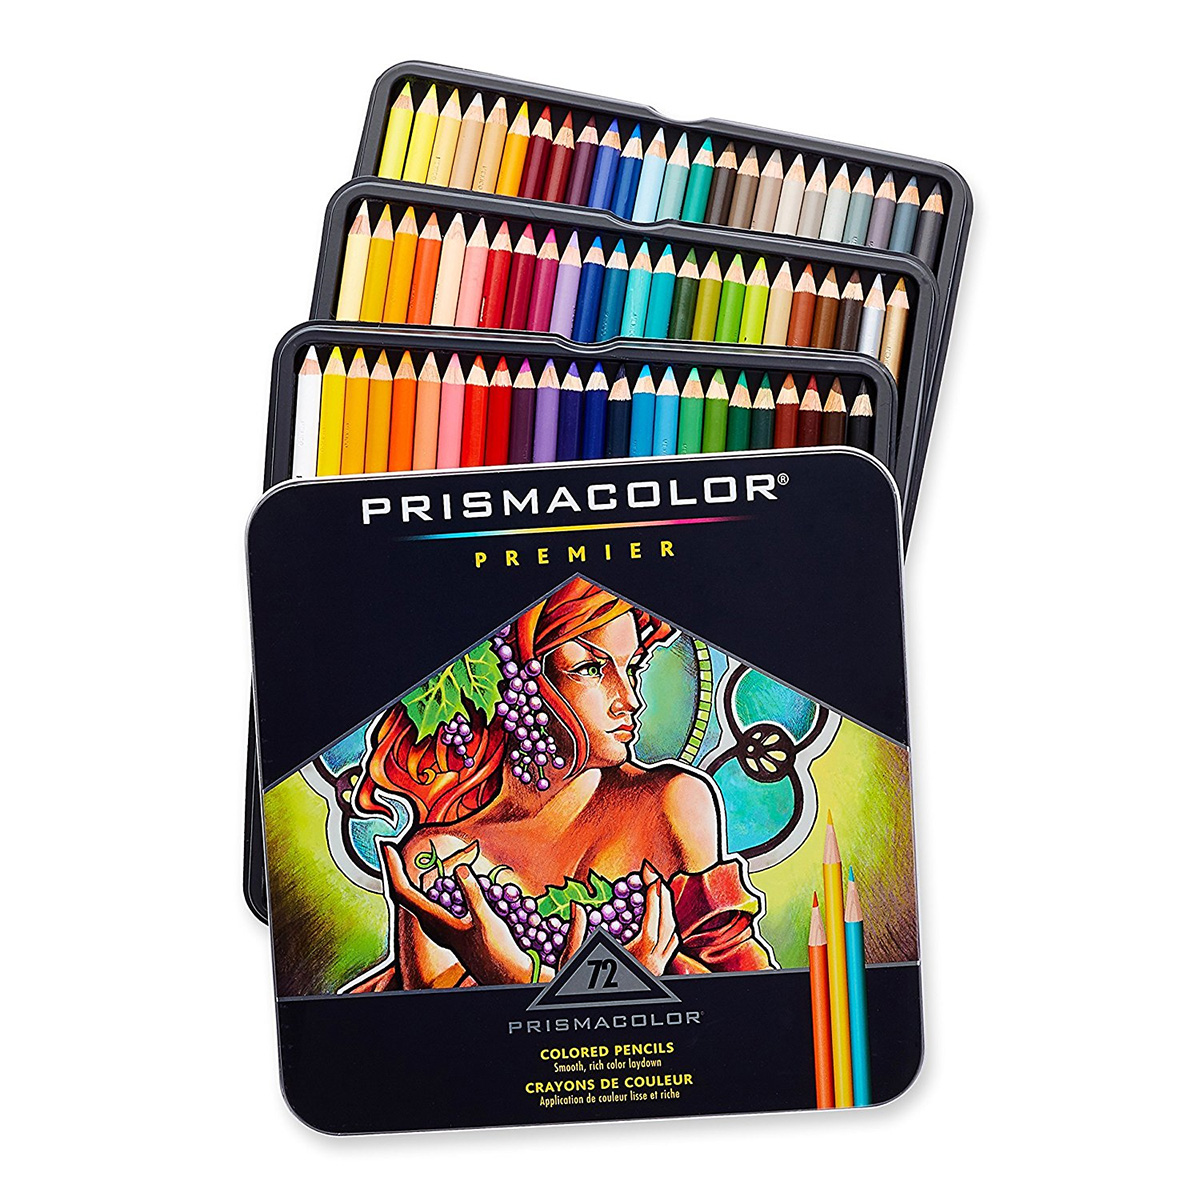 https://theinkstone.com/wp-content/uploads/2020/09/Prismacolor-Colored-Pencil-Set-72-3.jpg